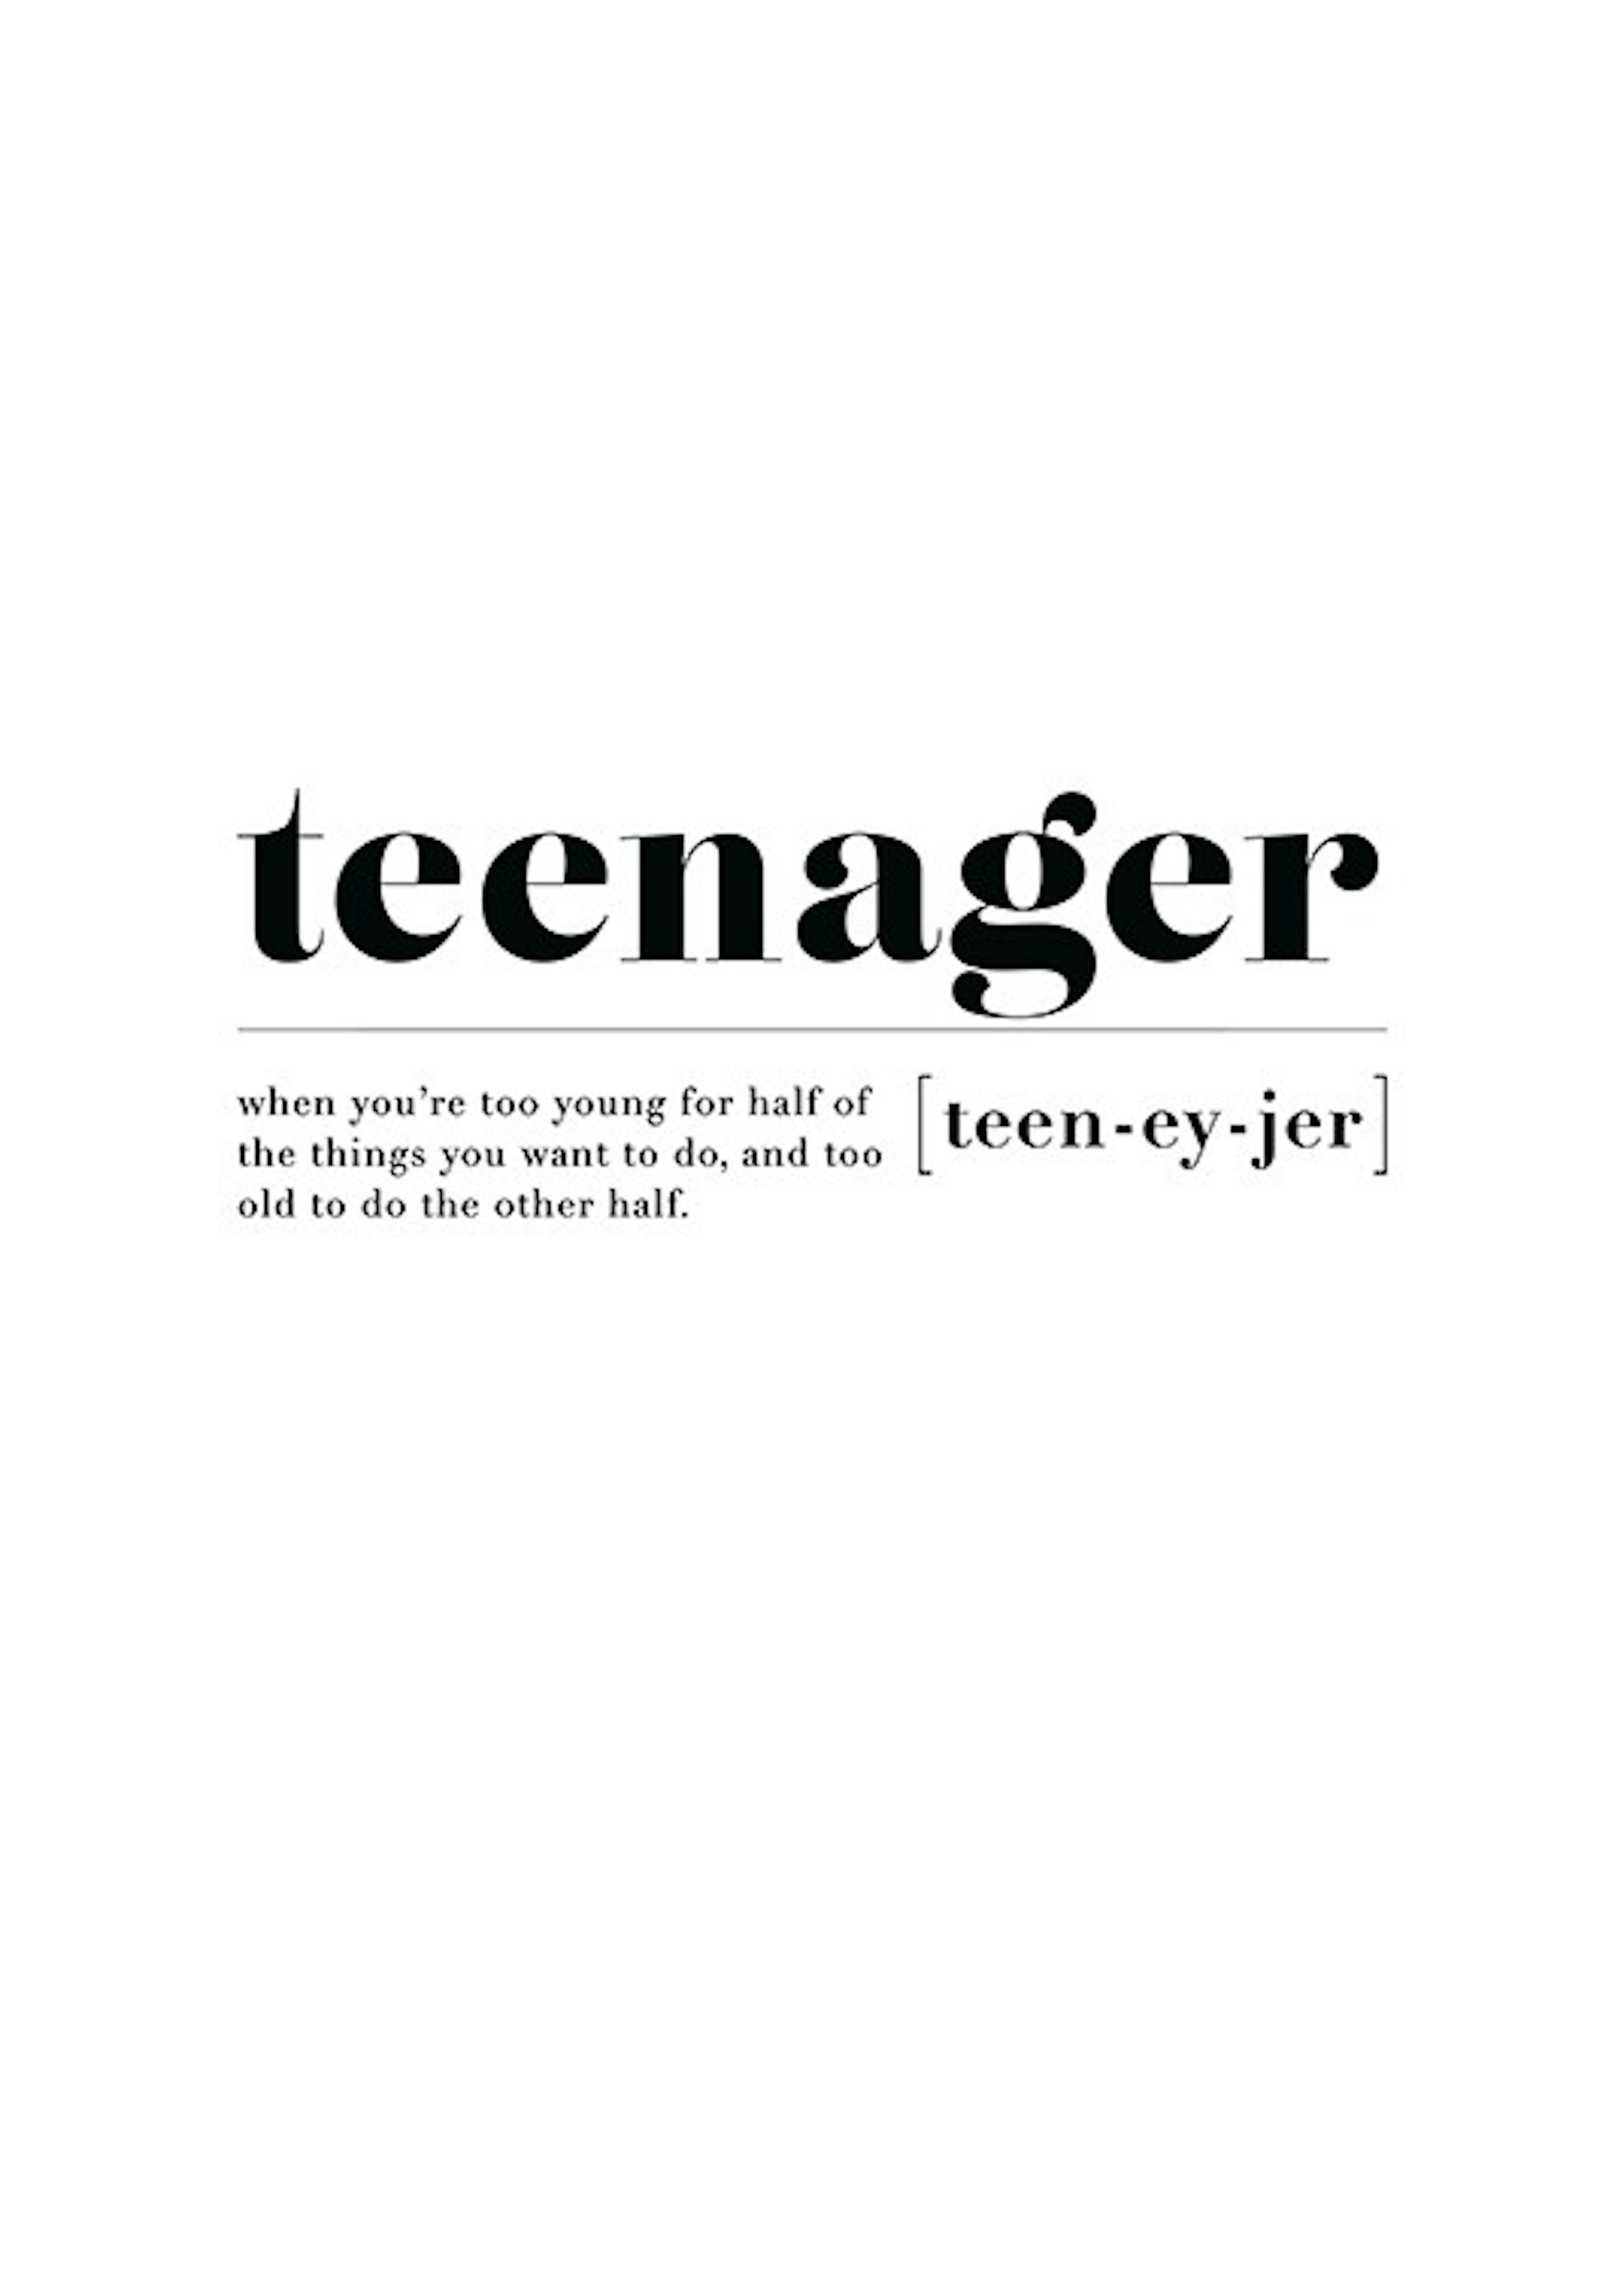 Teenager Print 0